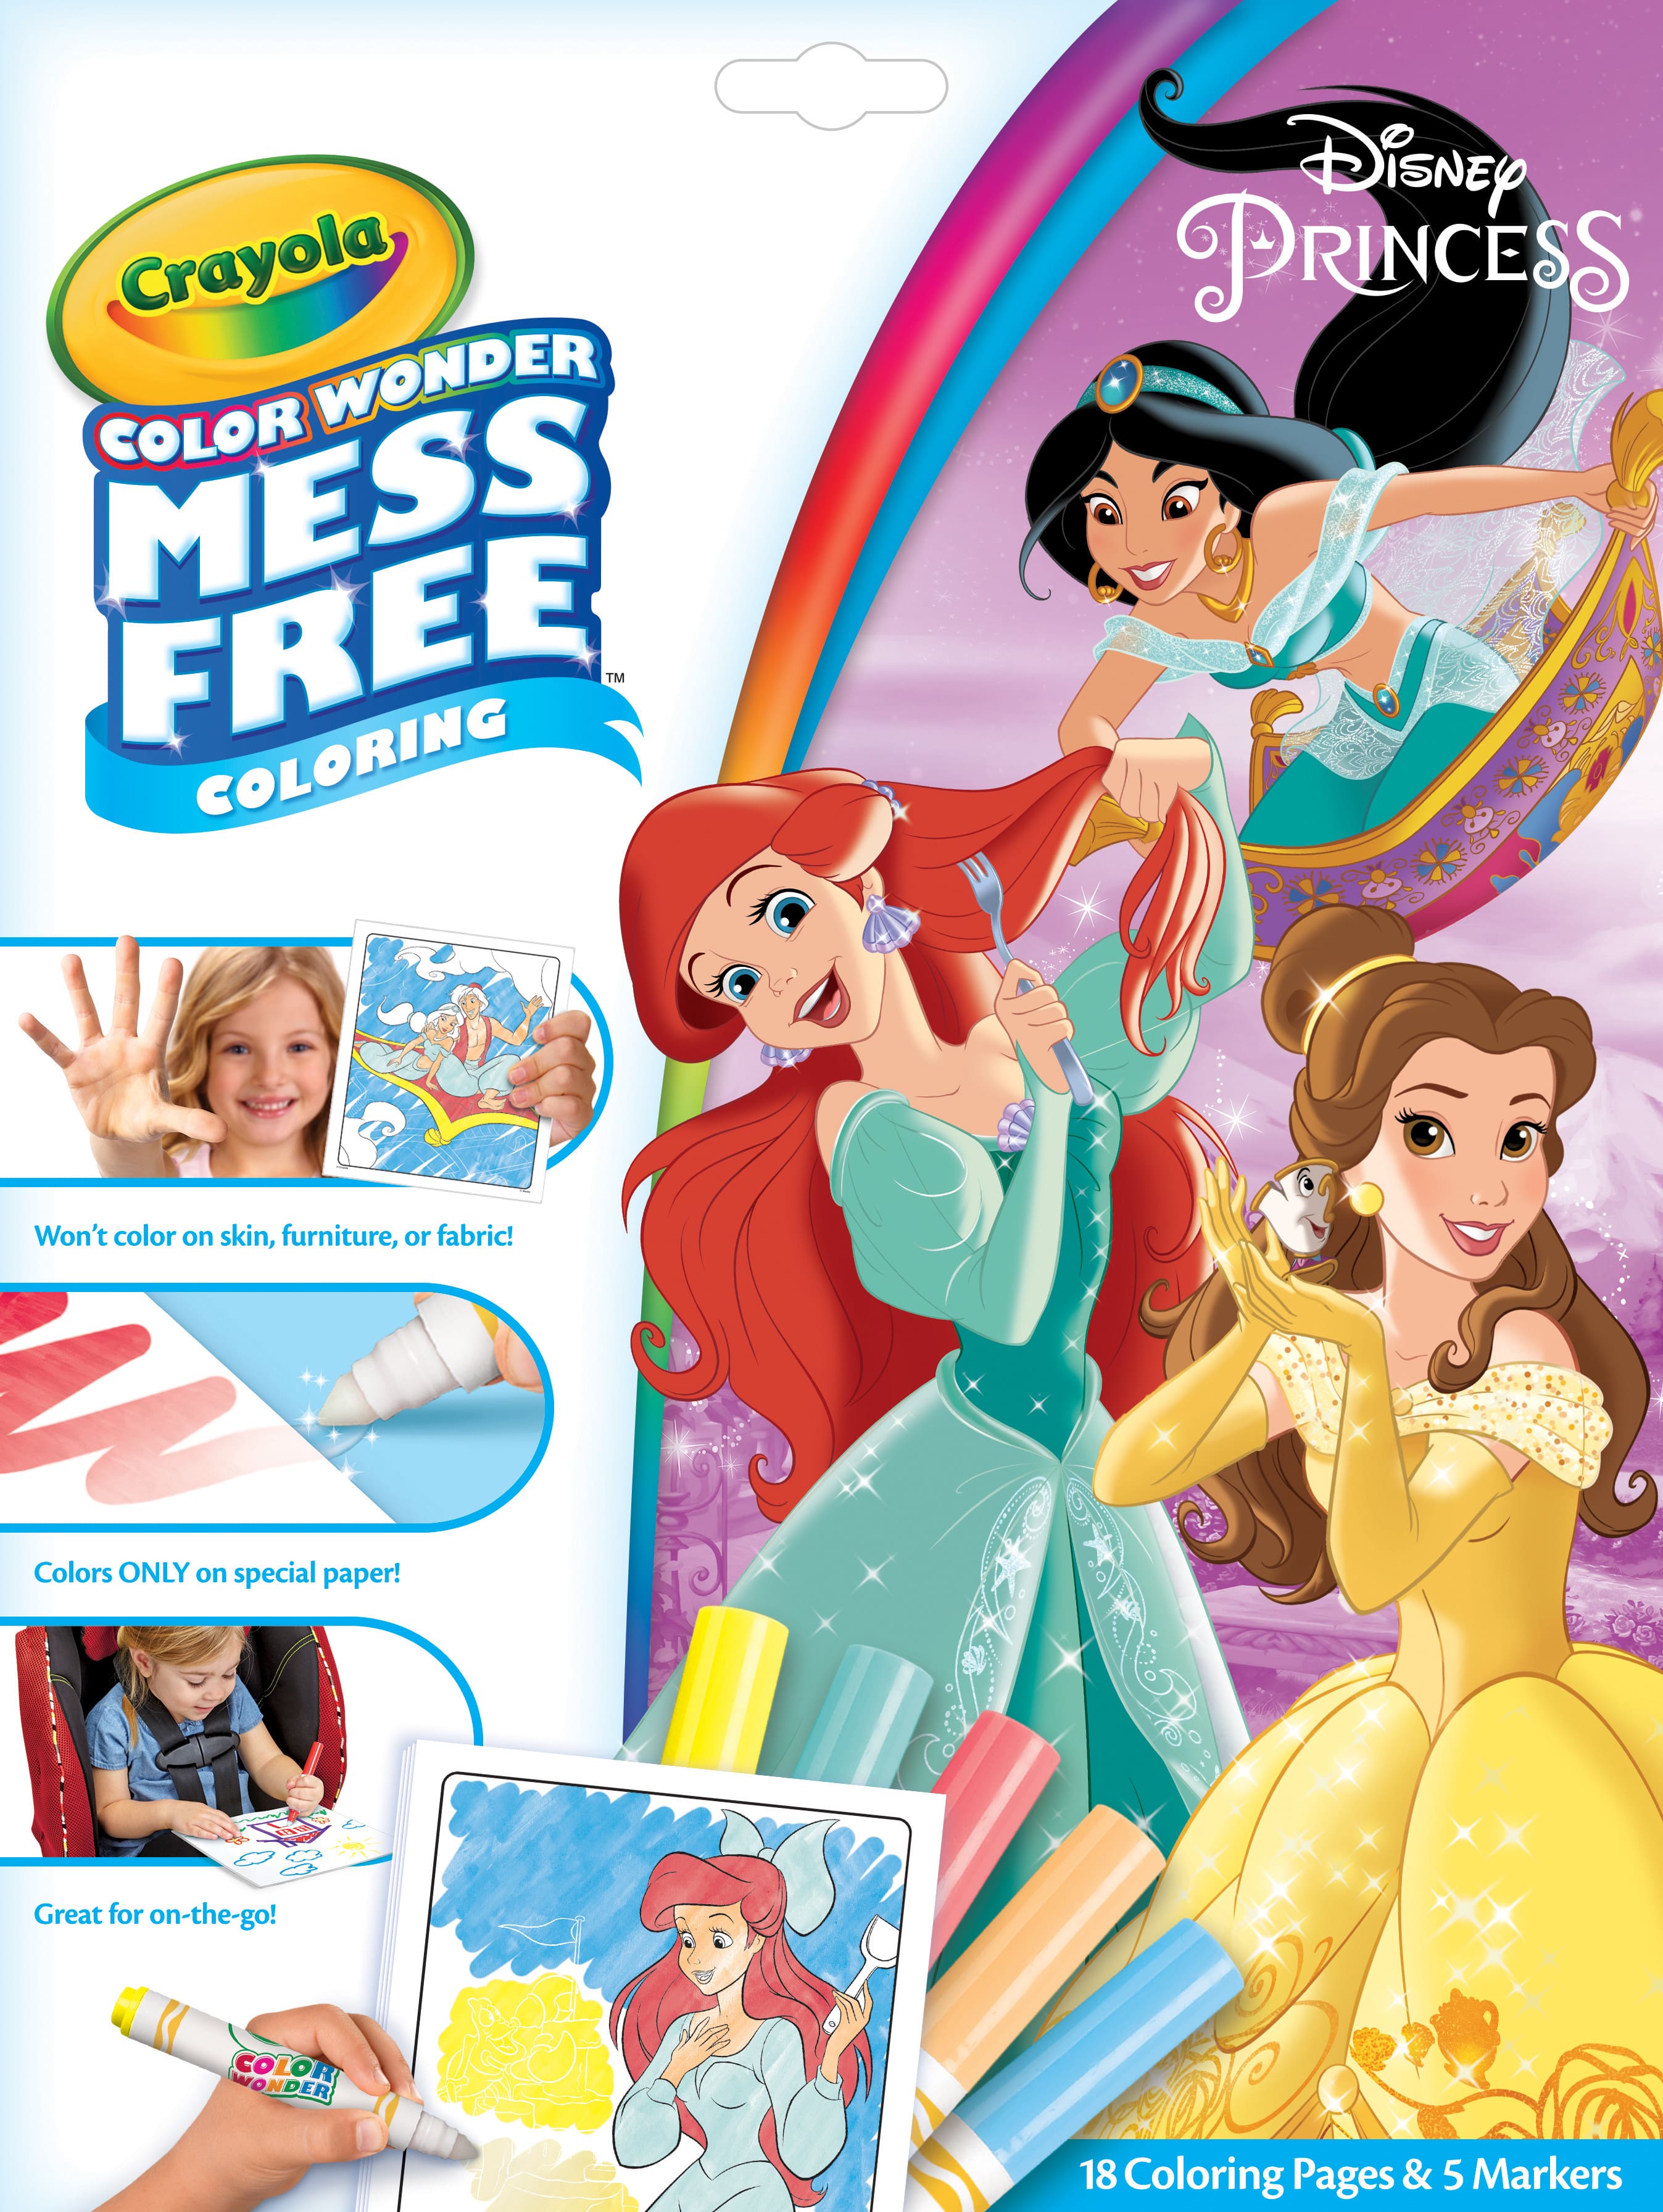 Buy The Crayola Color Wonder Mess Free Coloring Pad Markers C Disney Princess At Michaels